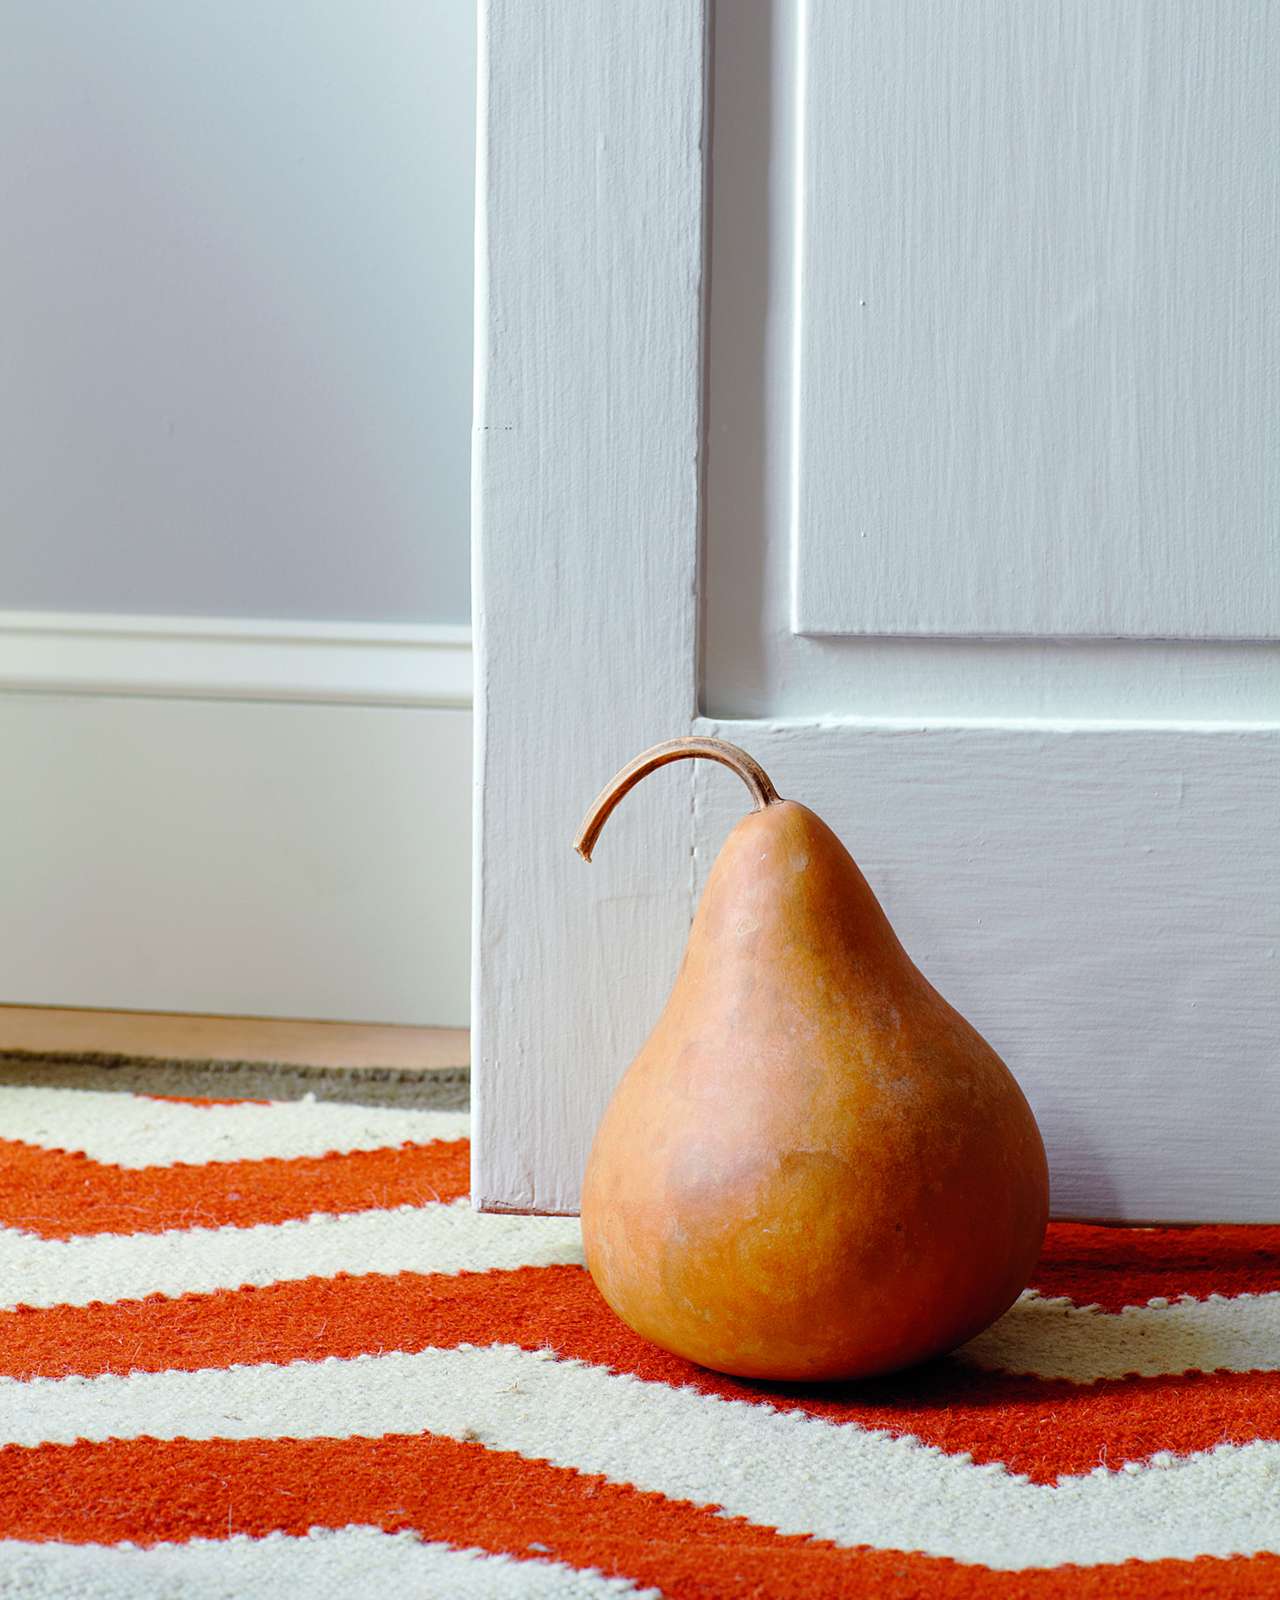 gourd placed door stopper on orange stripe carpet